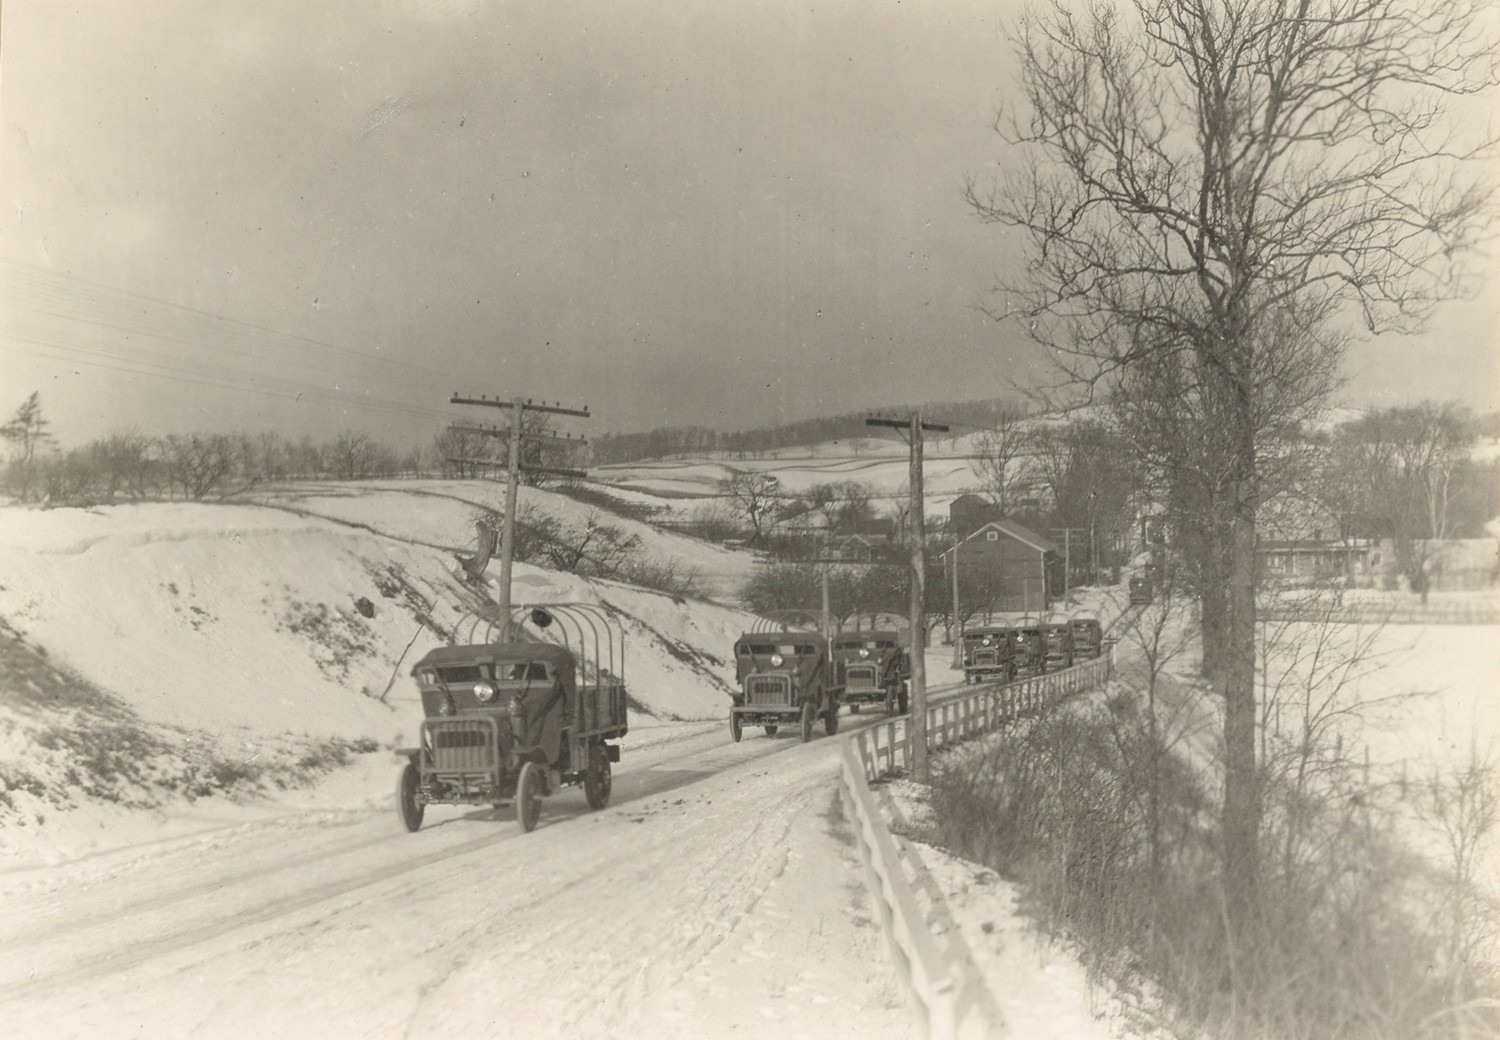 Pierce Arrow Factory Complex, Buffalo New York Train of Pierce Arrow trucks on road from Buffalo to New York City (1918)